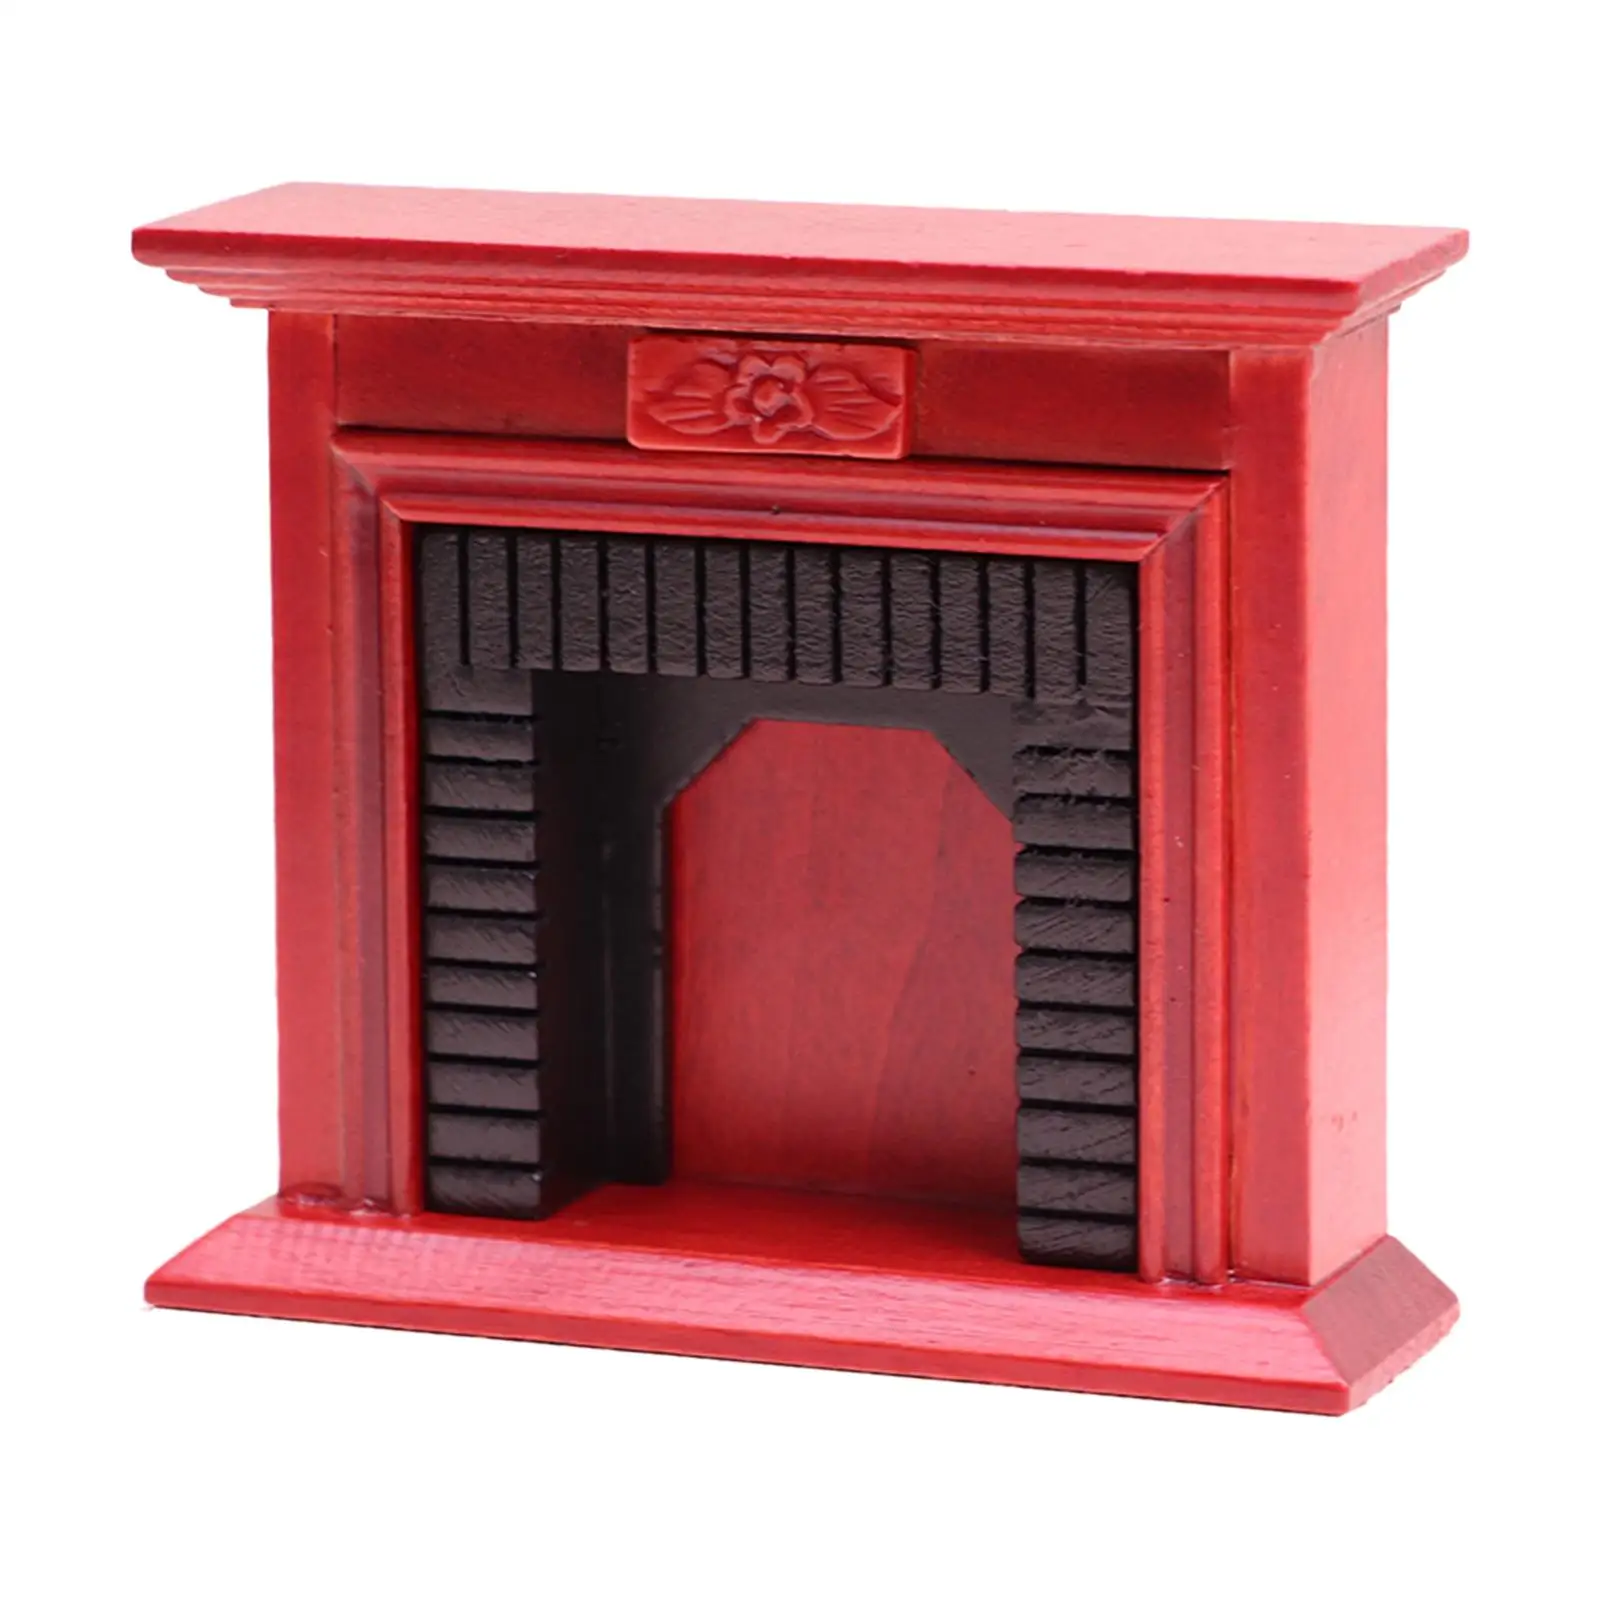 Miniature Fireplace Life Scene Dollhouse Decoration Accessories Vintage